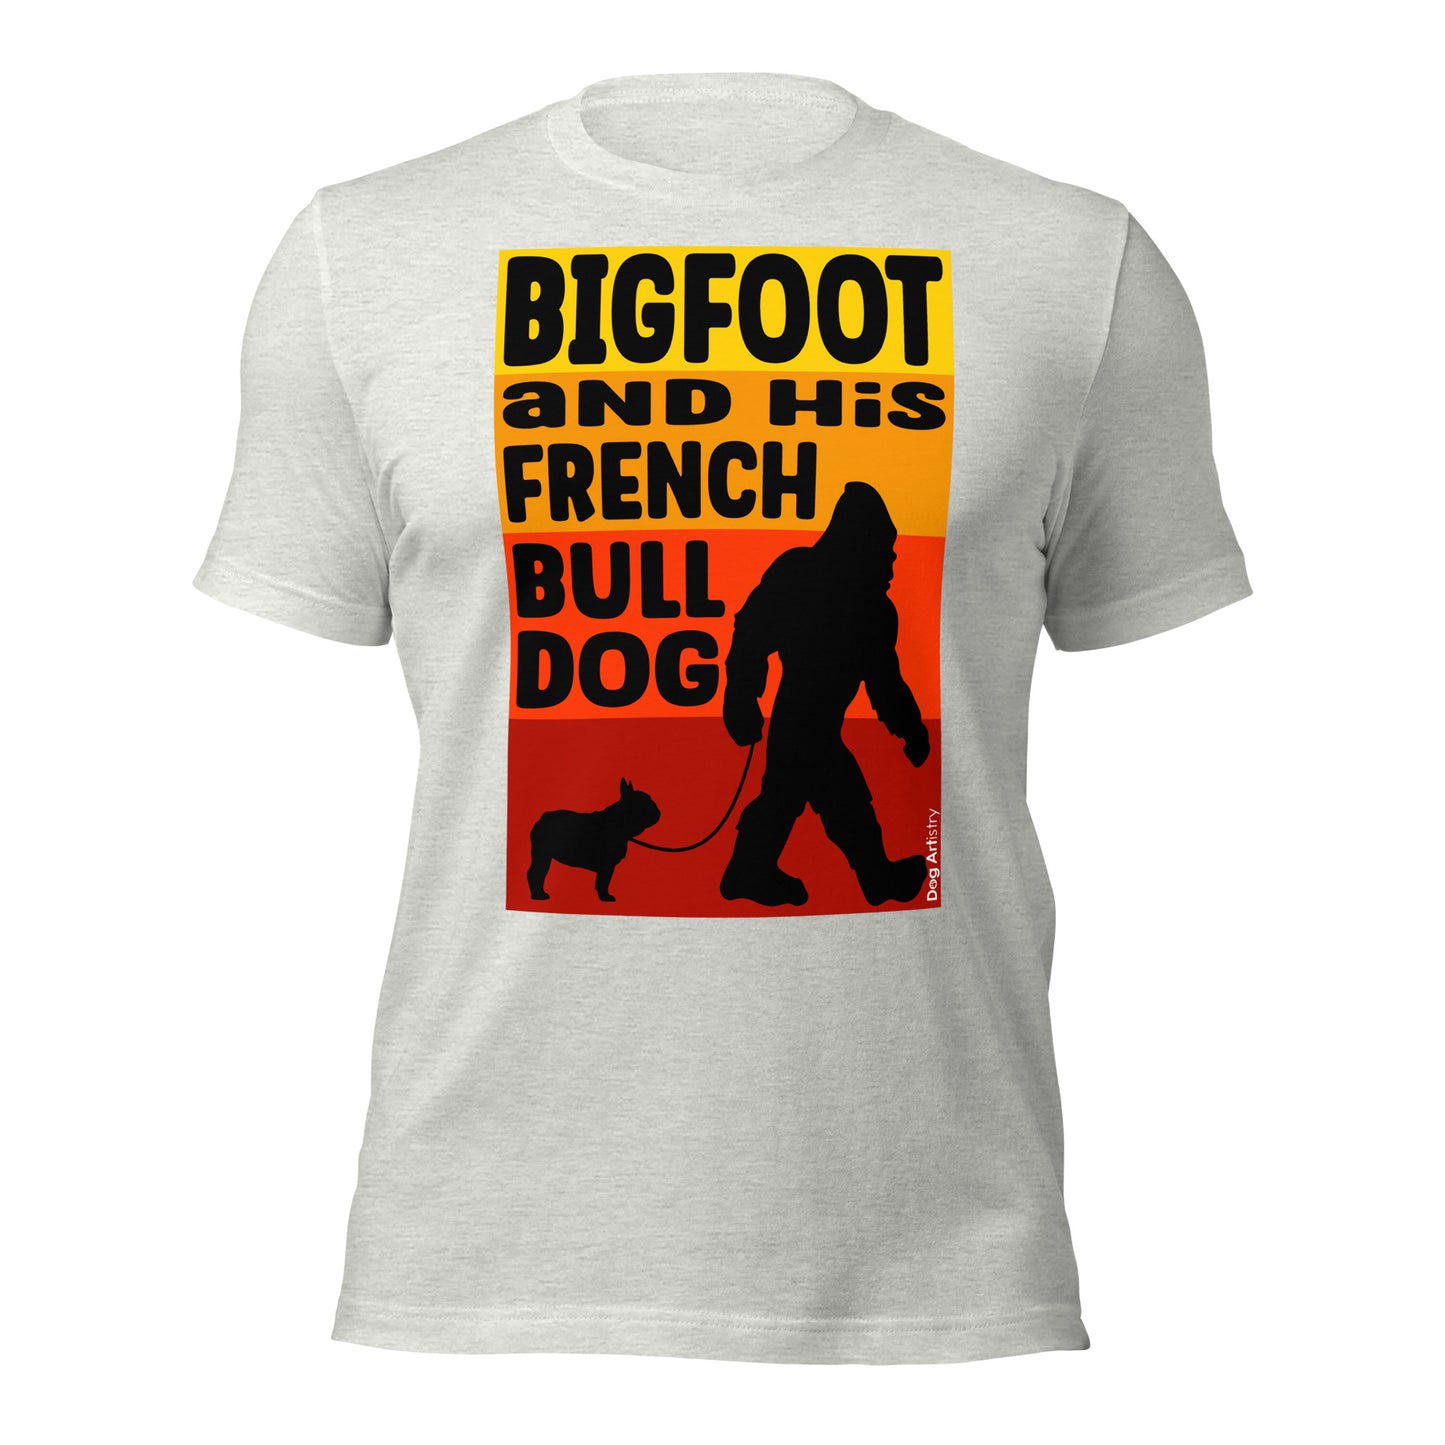 Bigfoot and his French Bulldog unisex ash t-shirt by Dog Artistry.